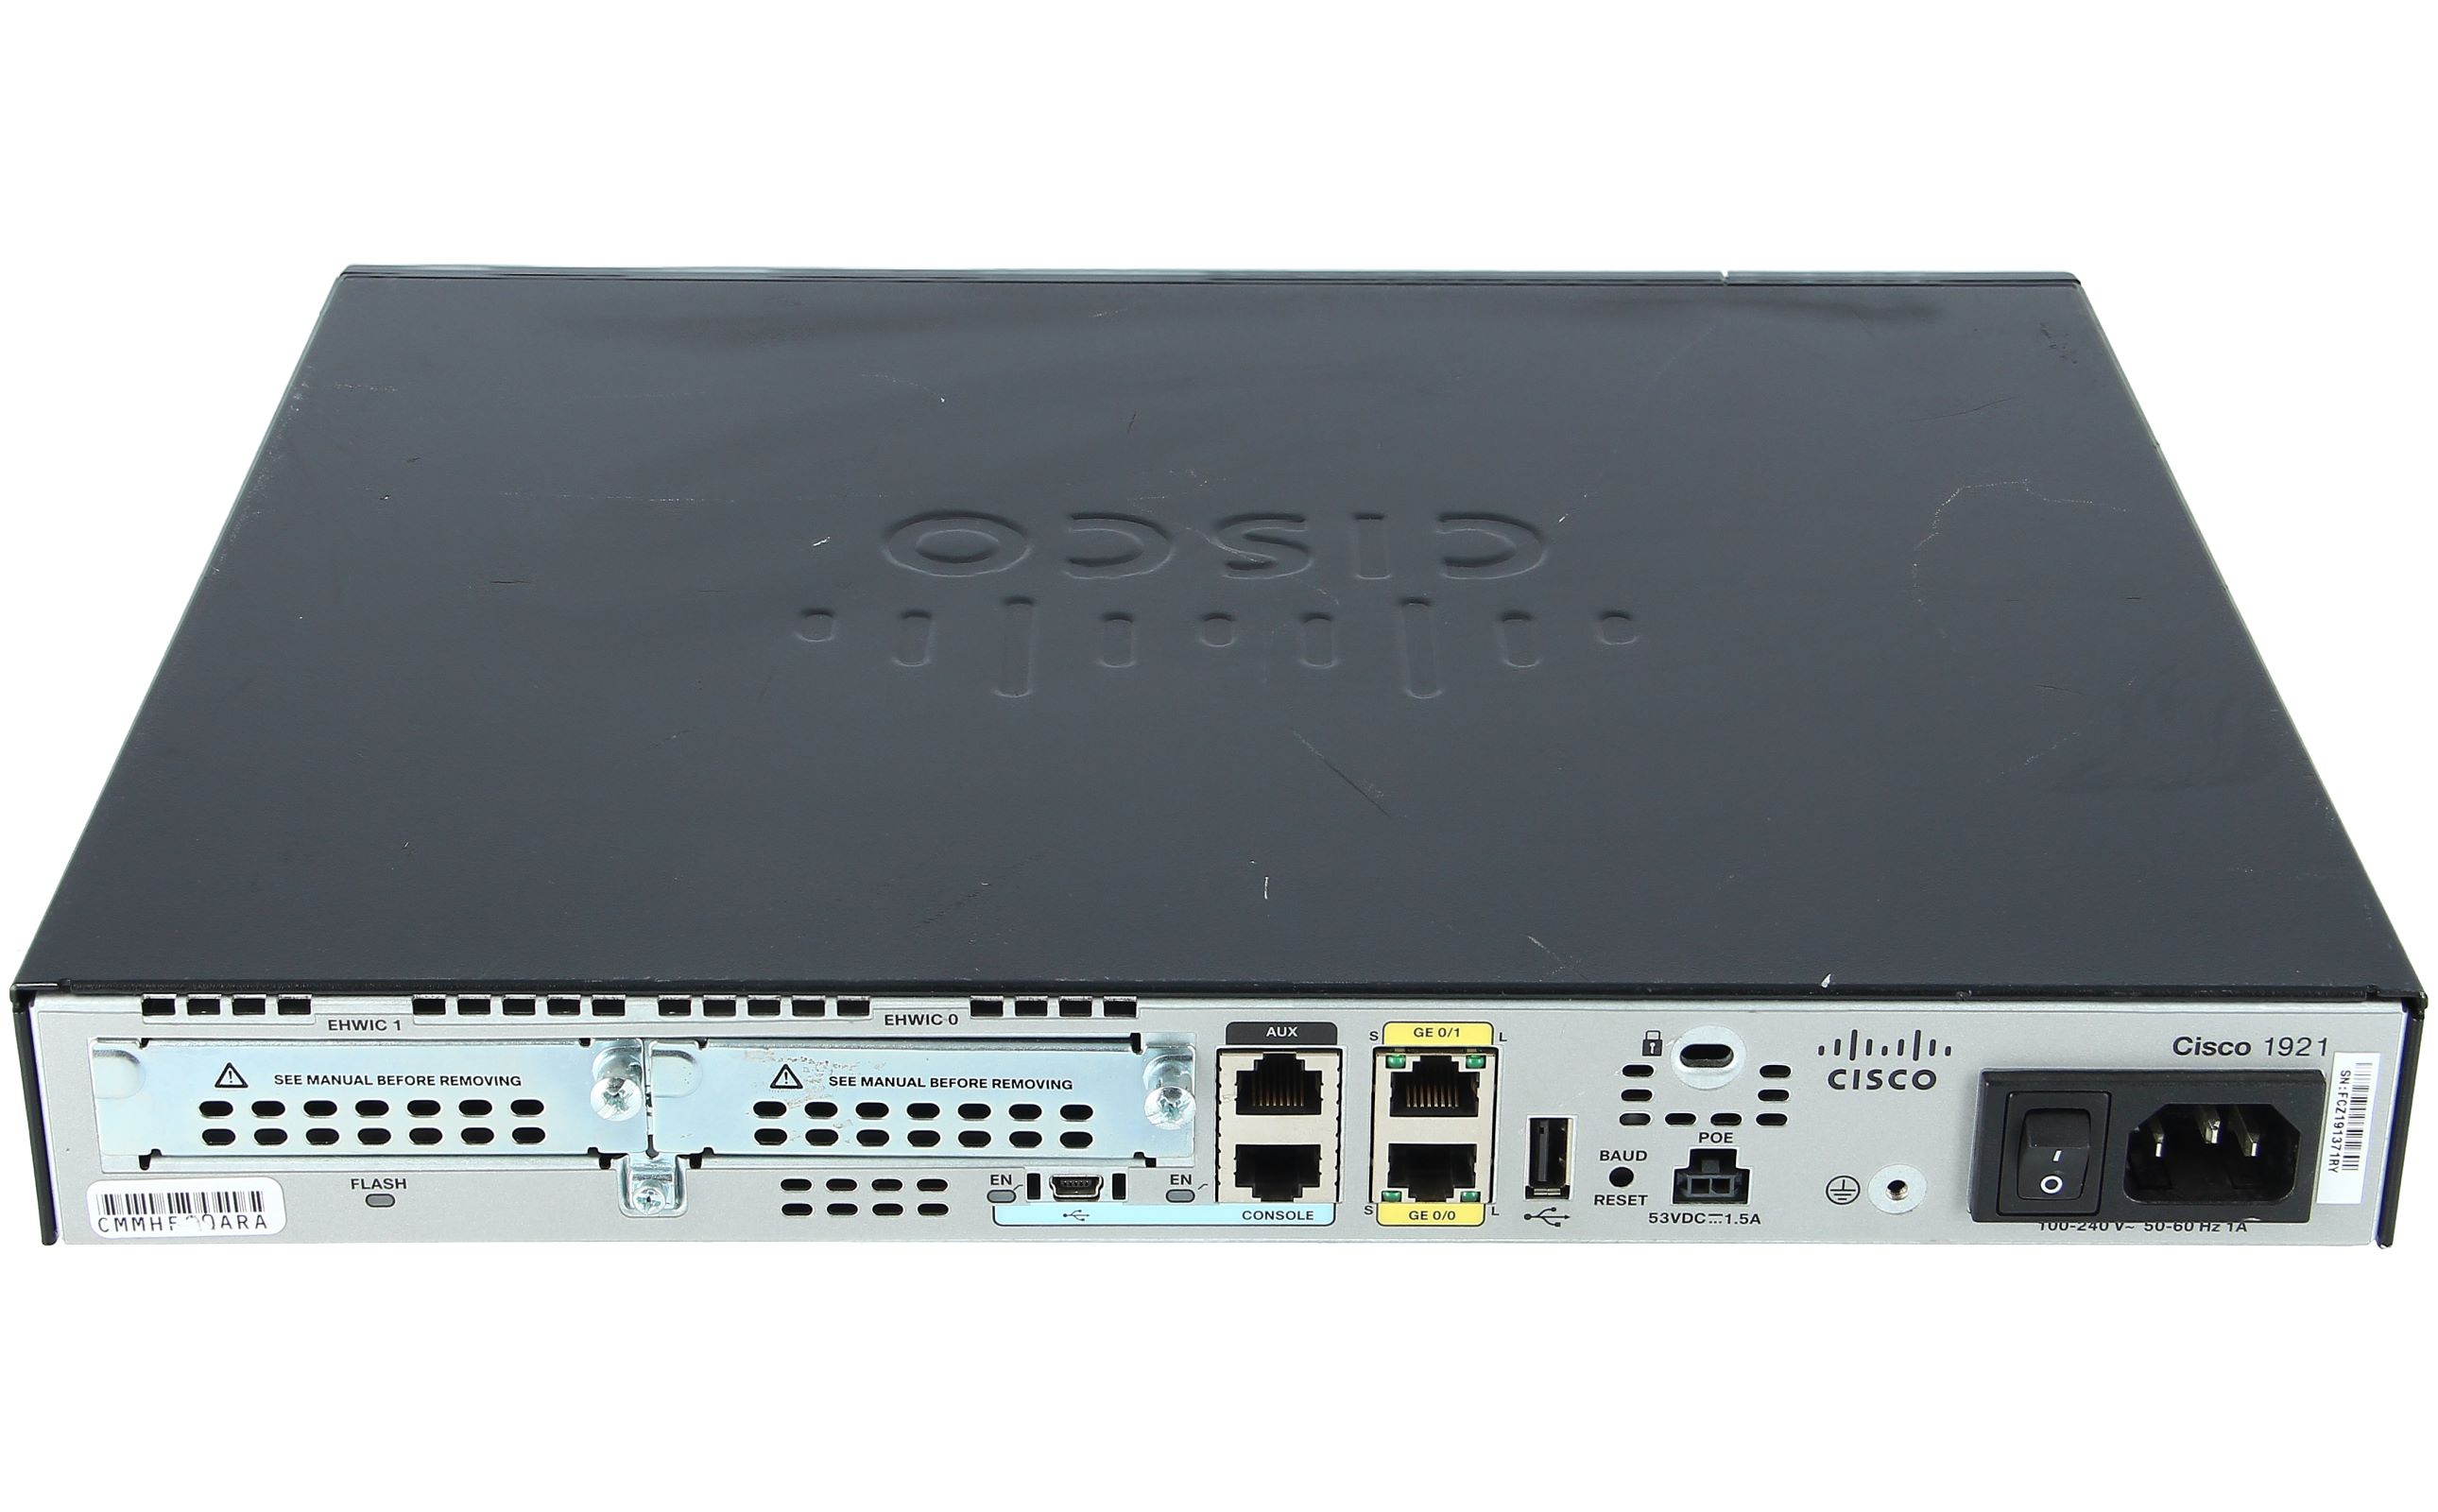 Netzwerk/Kabel und DSL Modems A DSL Modem EHWIC 100 Mbps Produkt Kategorie Cisco 